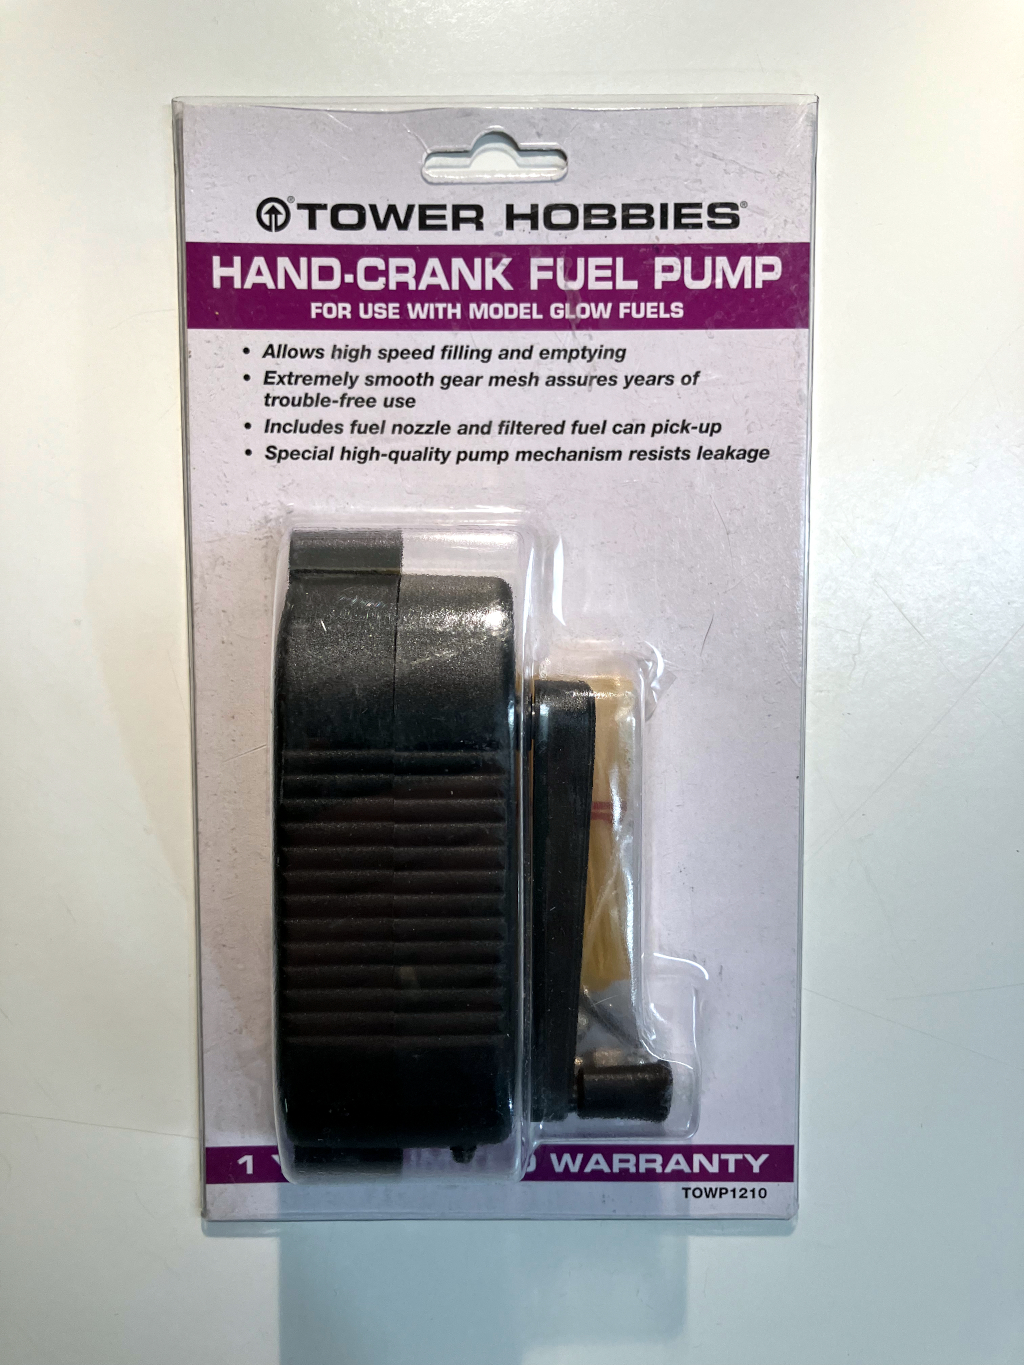 Tower Hobbies Hand-Crank Fuel Pump